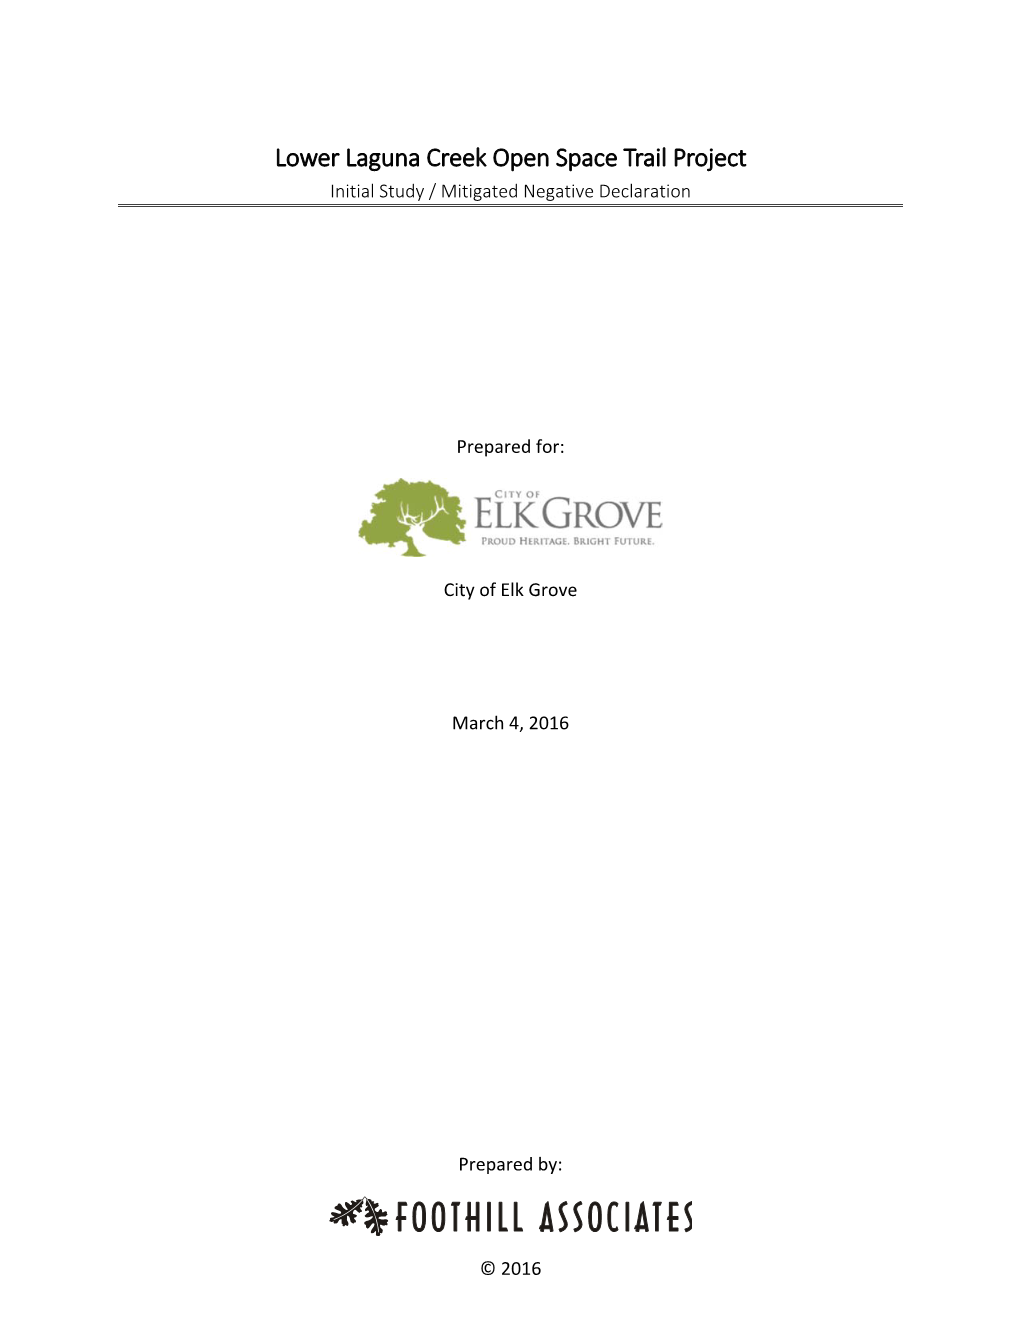 Lower Laguna Creek Open Space Trail Project Initial Study / Mitigated Negative Declaration